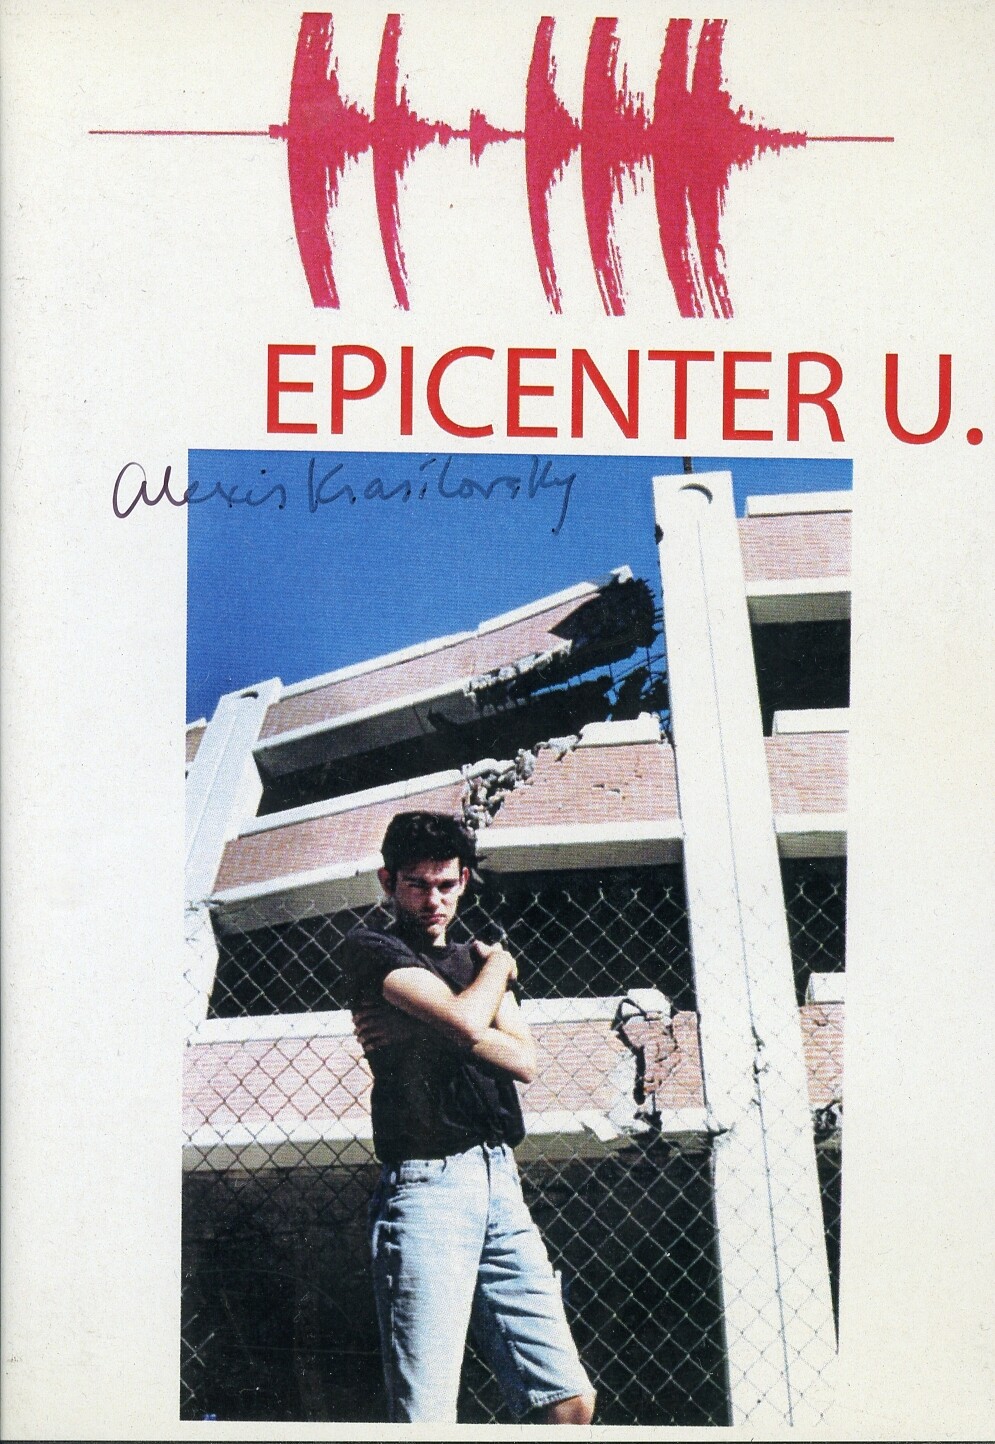 Alexis Krasilovsky - Epicenter U (1995)